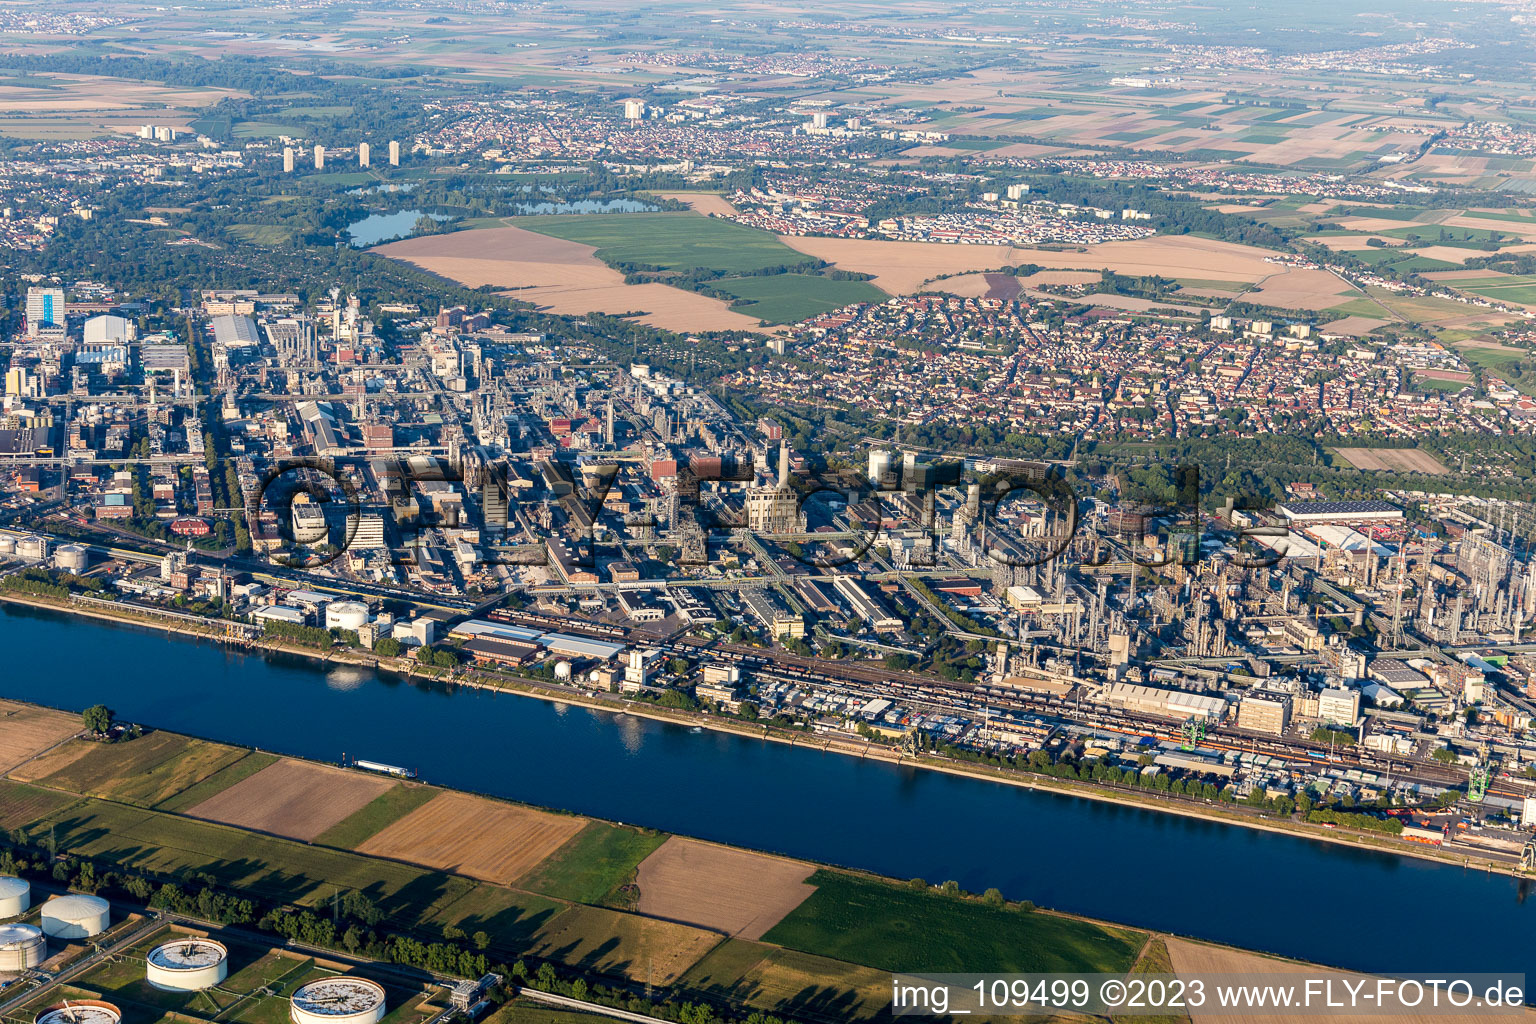 Bird's eye view of District BASF in Ludwigshafen am Rhein in the state Rhineland-Palatinate, Germany